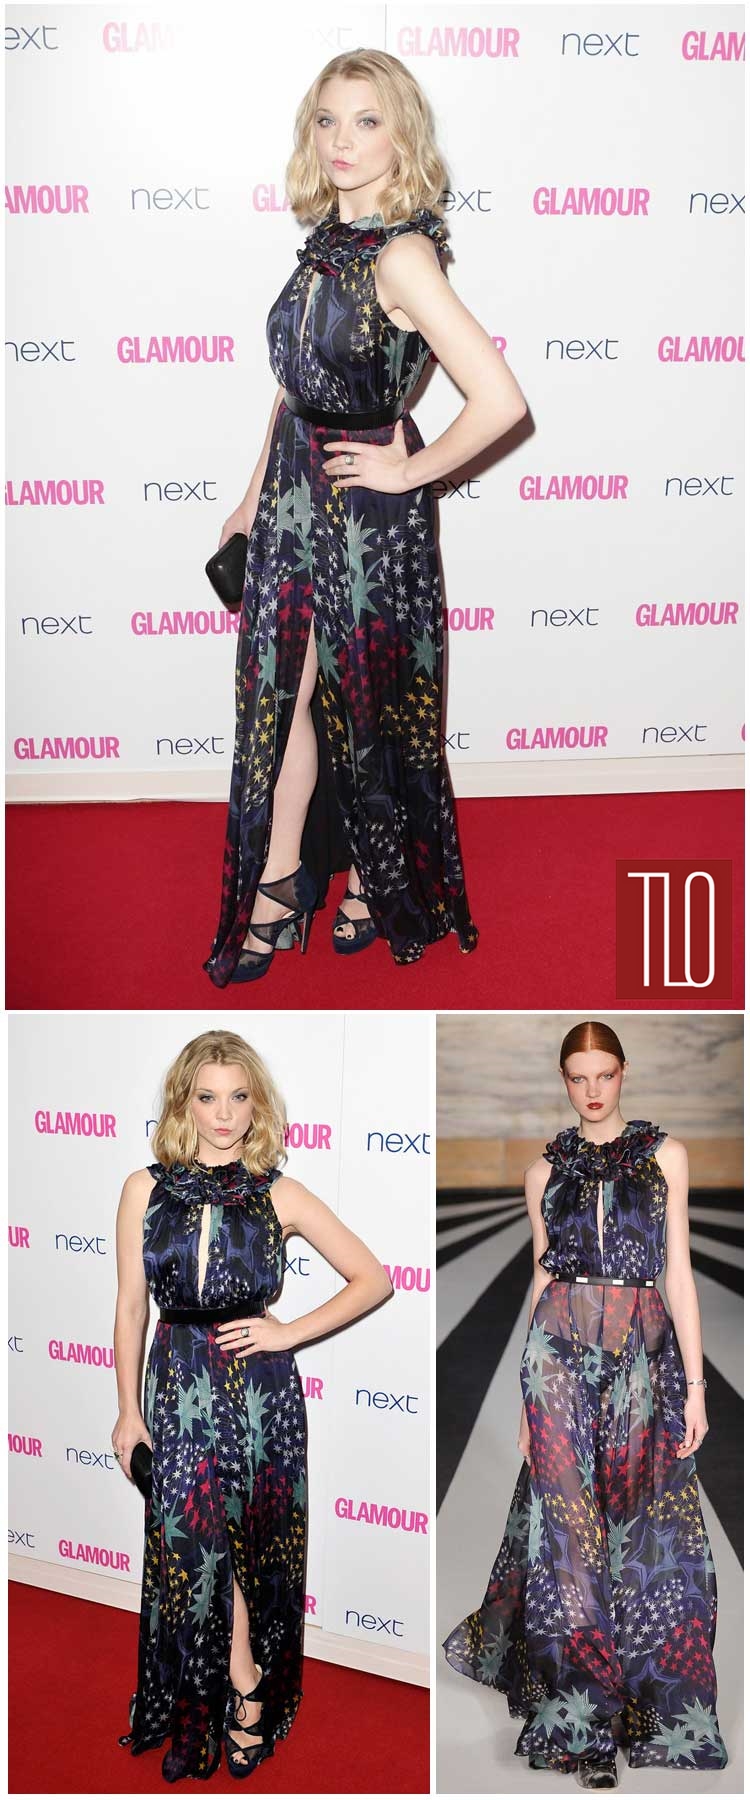 Natalie-Dormer-Matthew-Williamson-Glamour-Women-Year-Awards-2014-Tom-Lorenzo-Site-TLO (1)